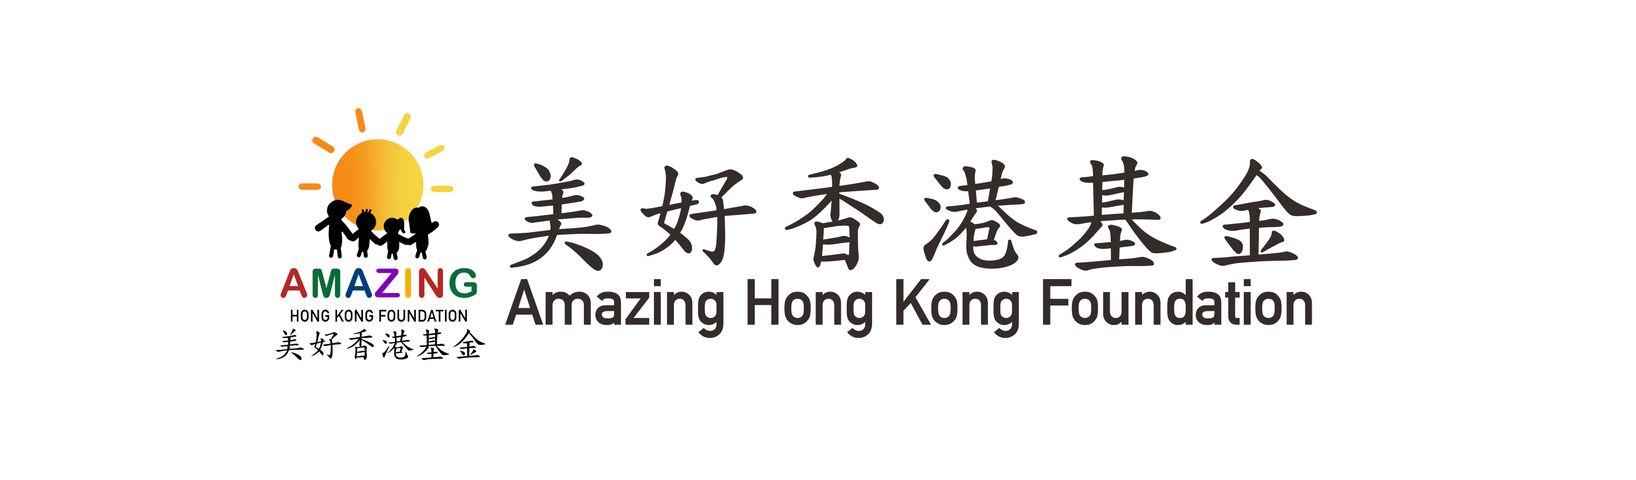 Amazing Hong Kong Foundation Ltd 美好香港基金